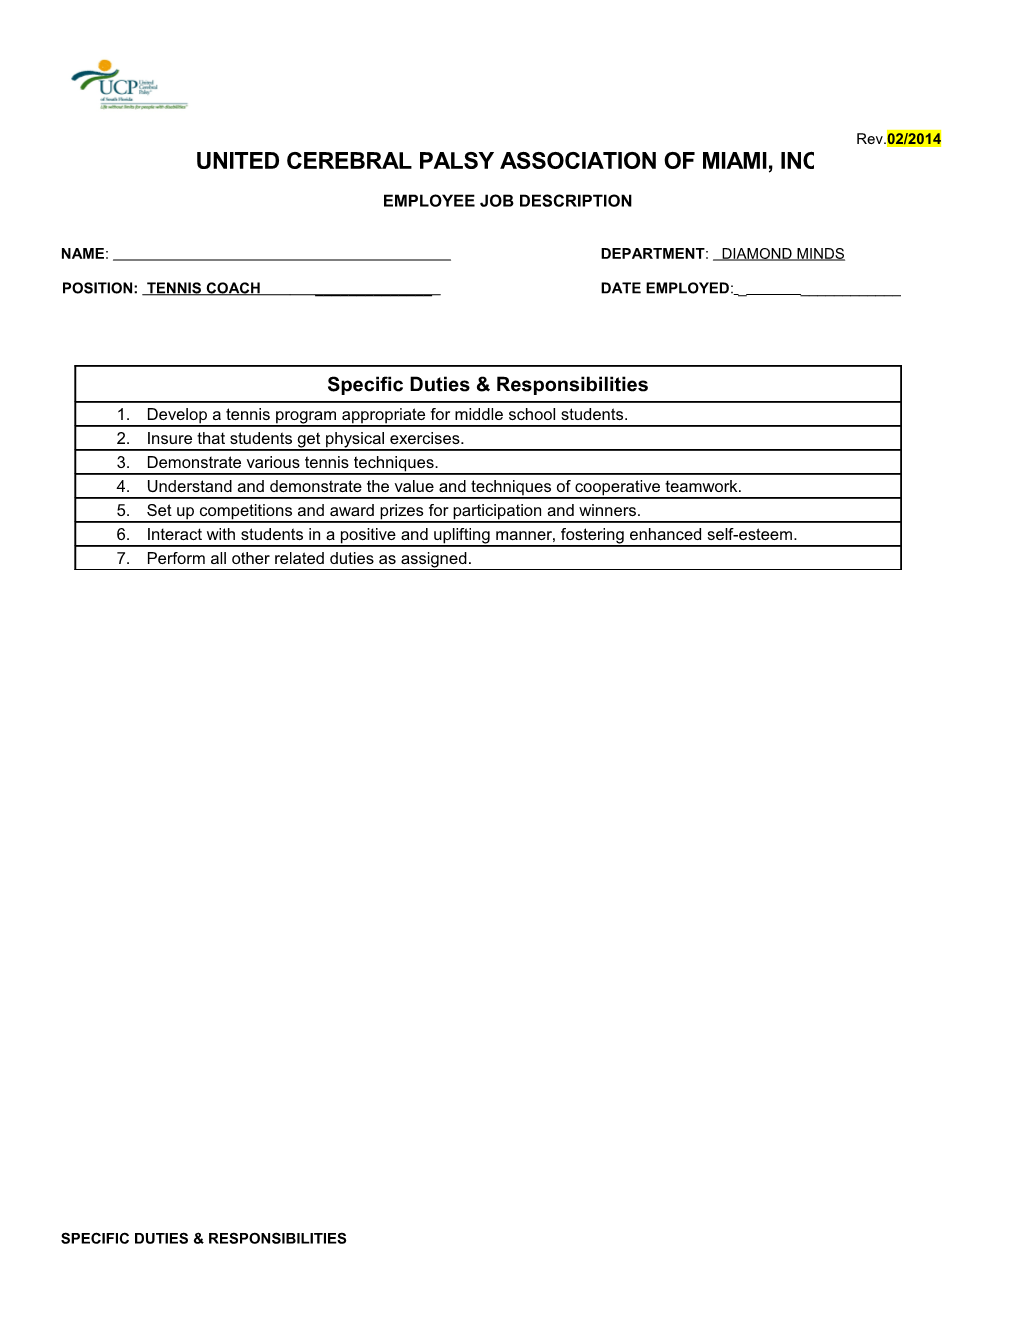 United Cerebral Palsy Association of Miami, Inc